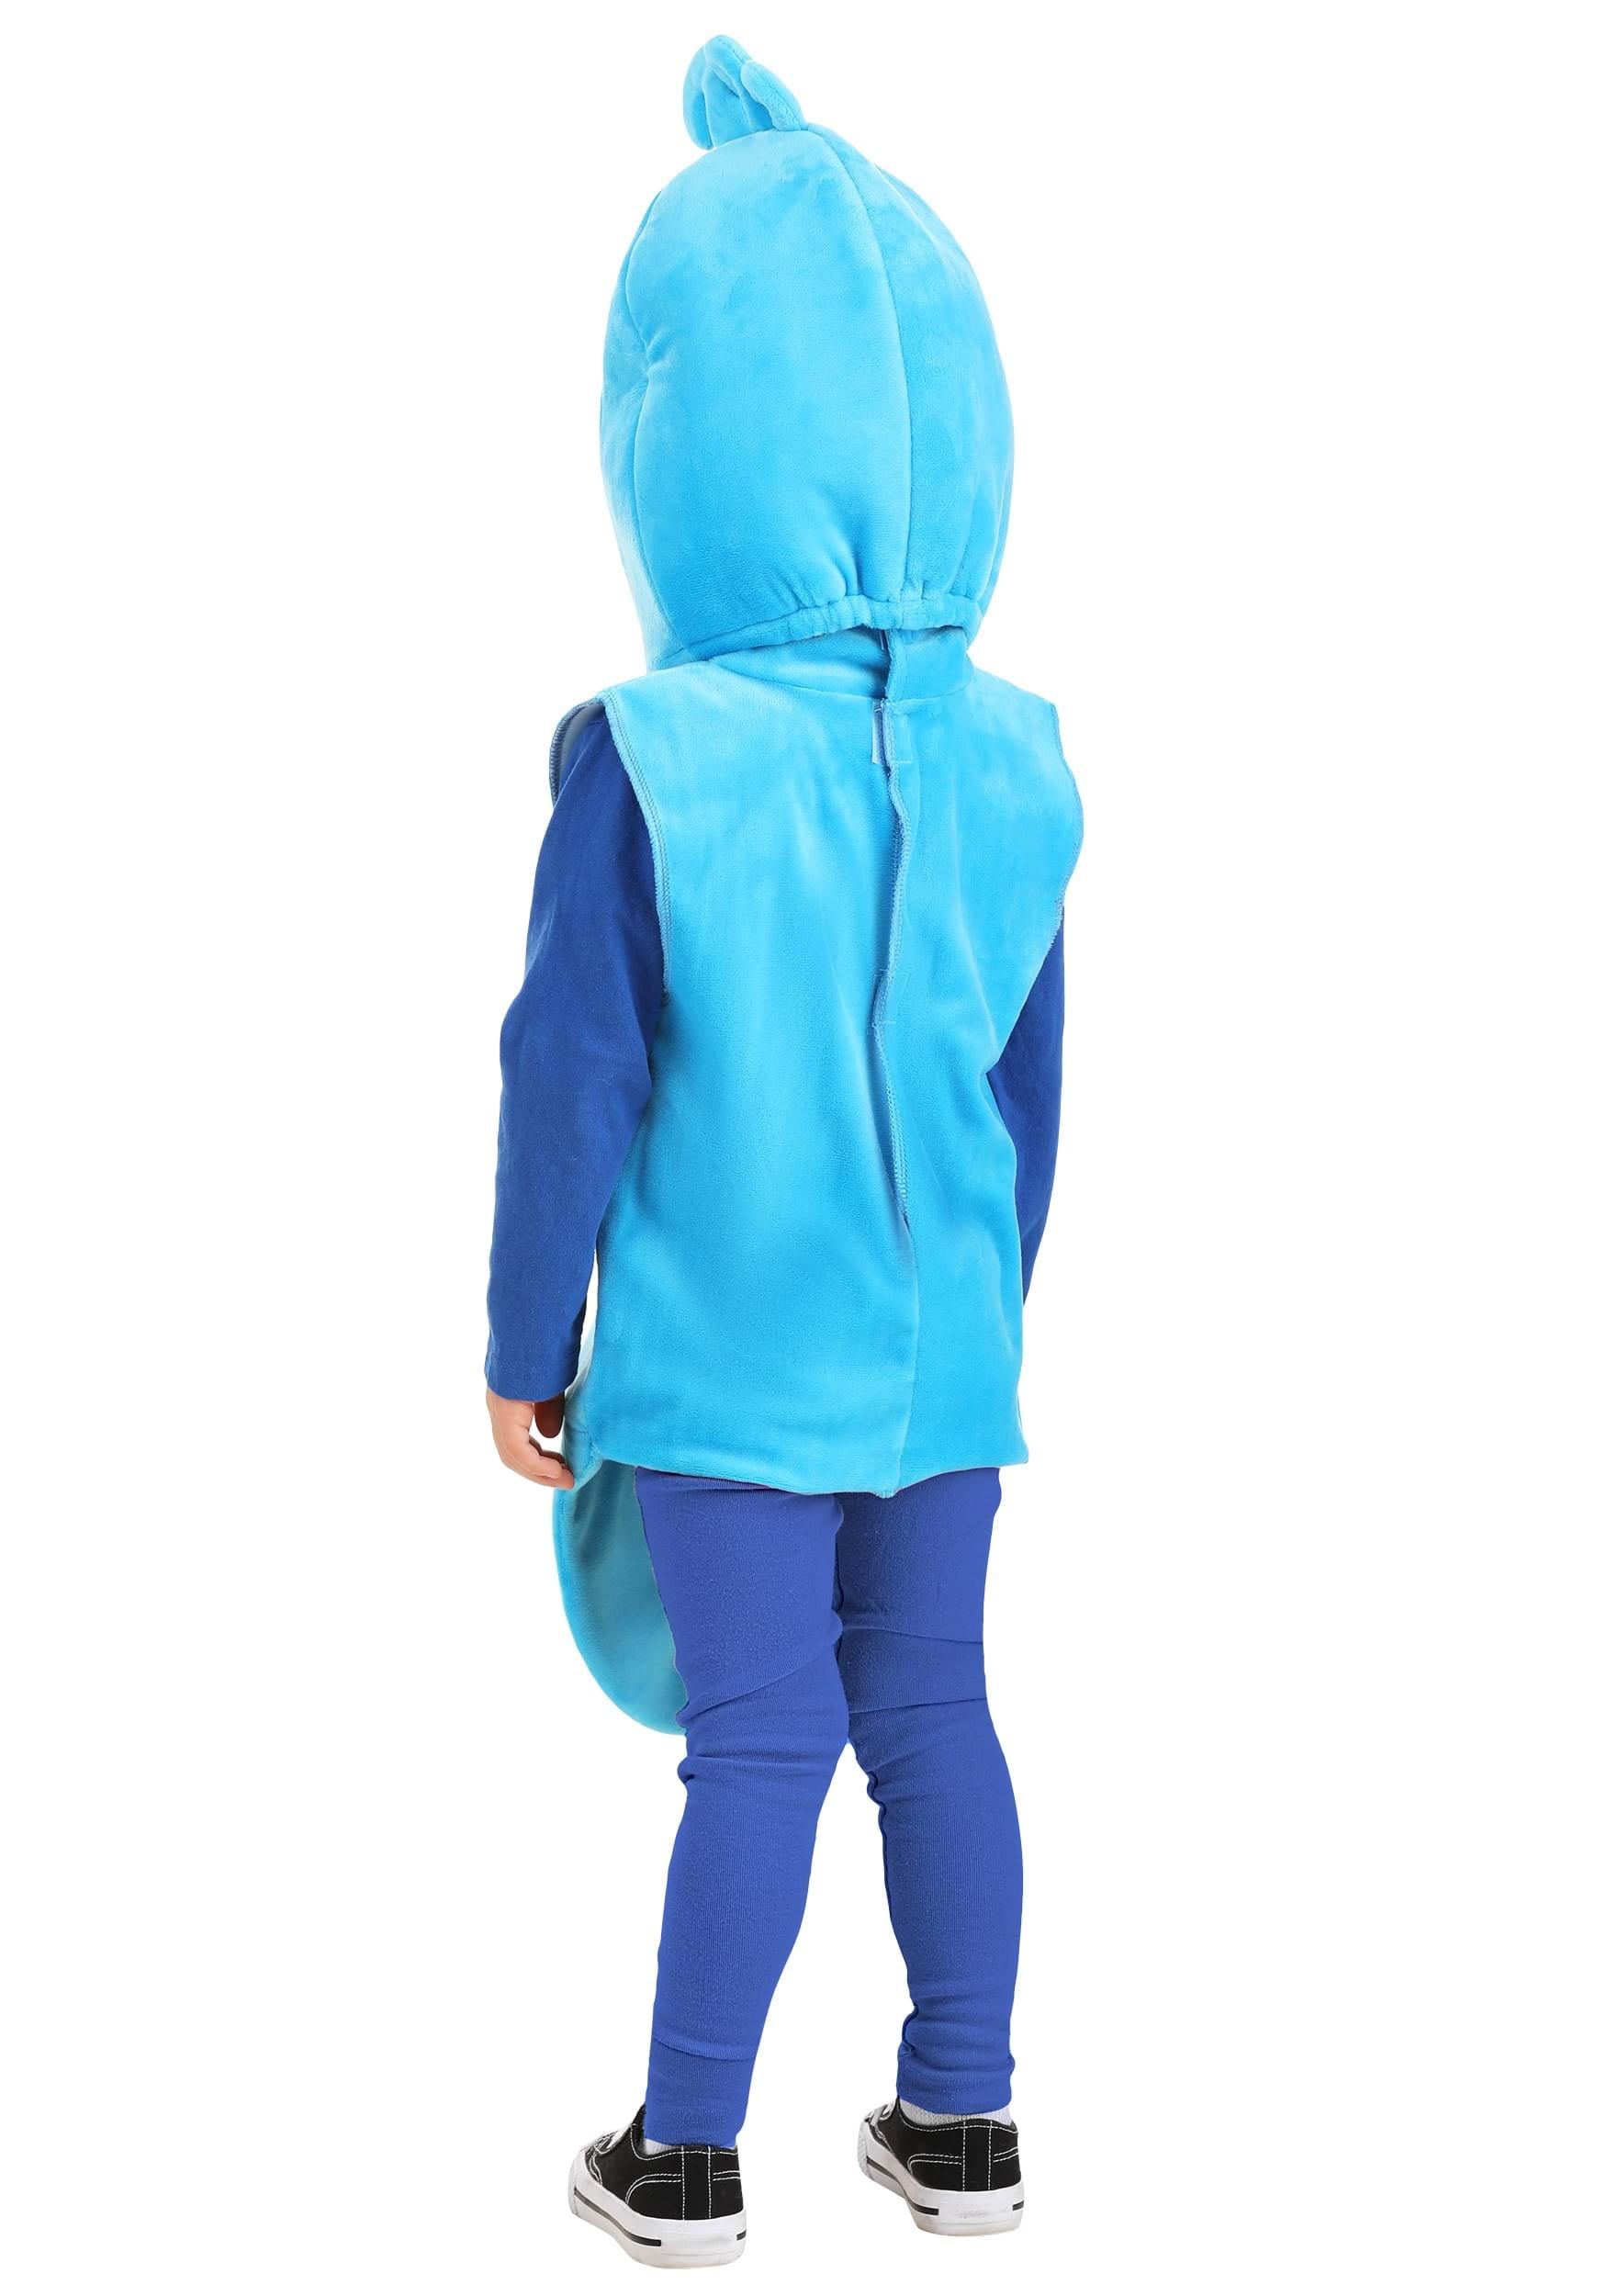 Dr. Seuss Toddler Blue Fish Costume